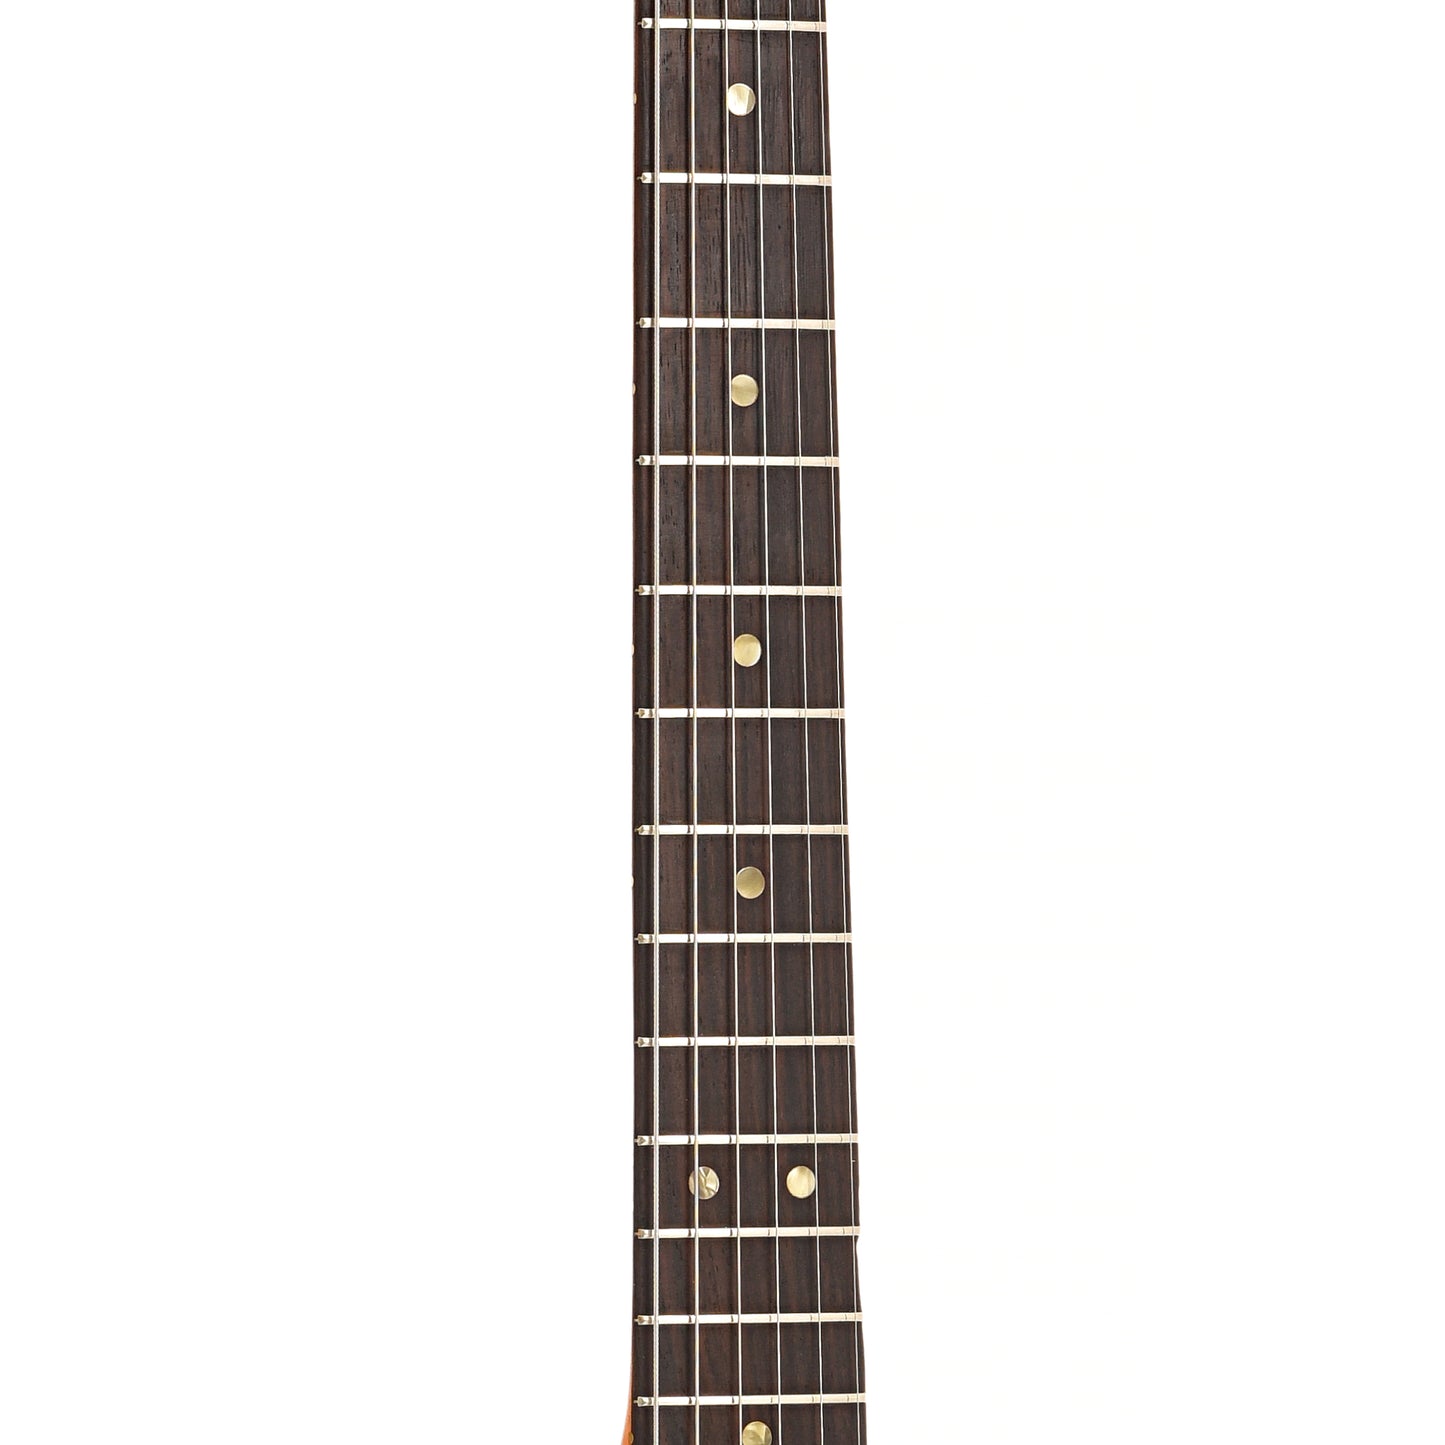 Fretboard of Fender Parts Telecaster Electric Guitar (1952/1967)